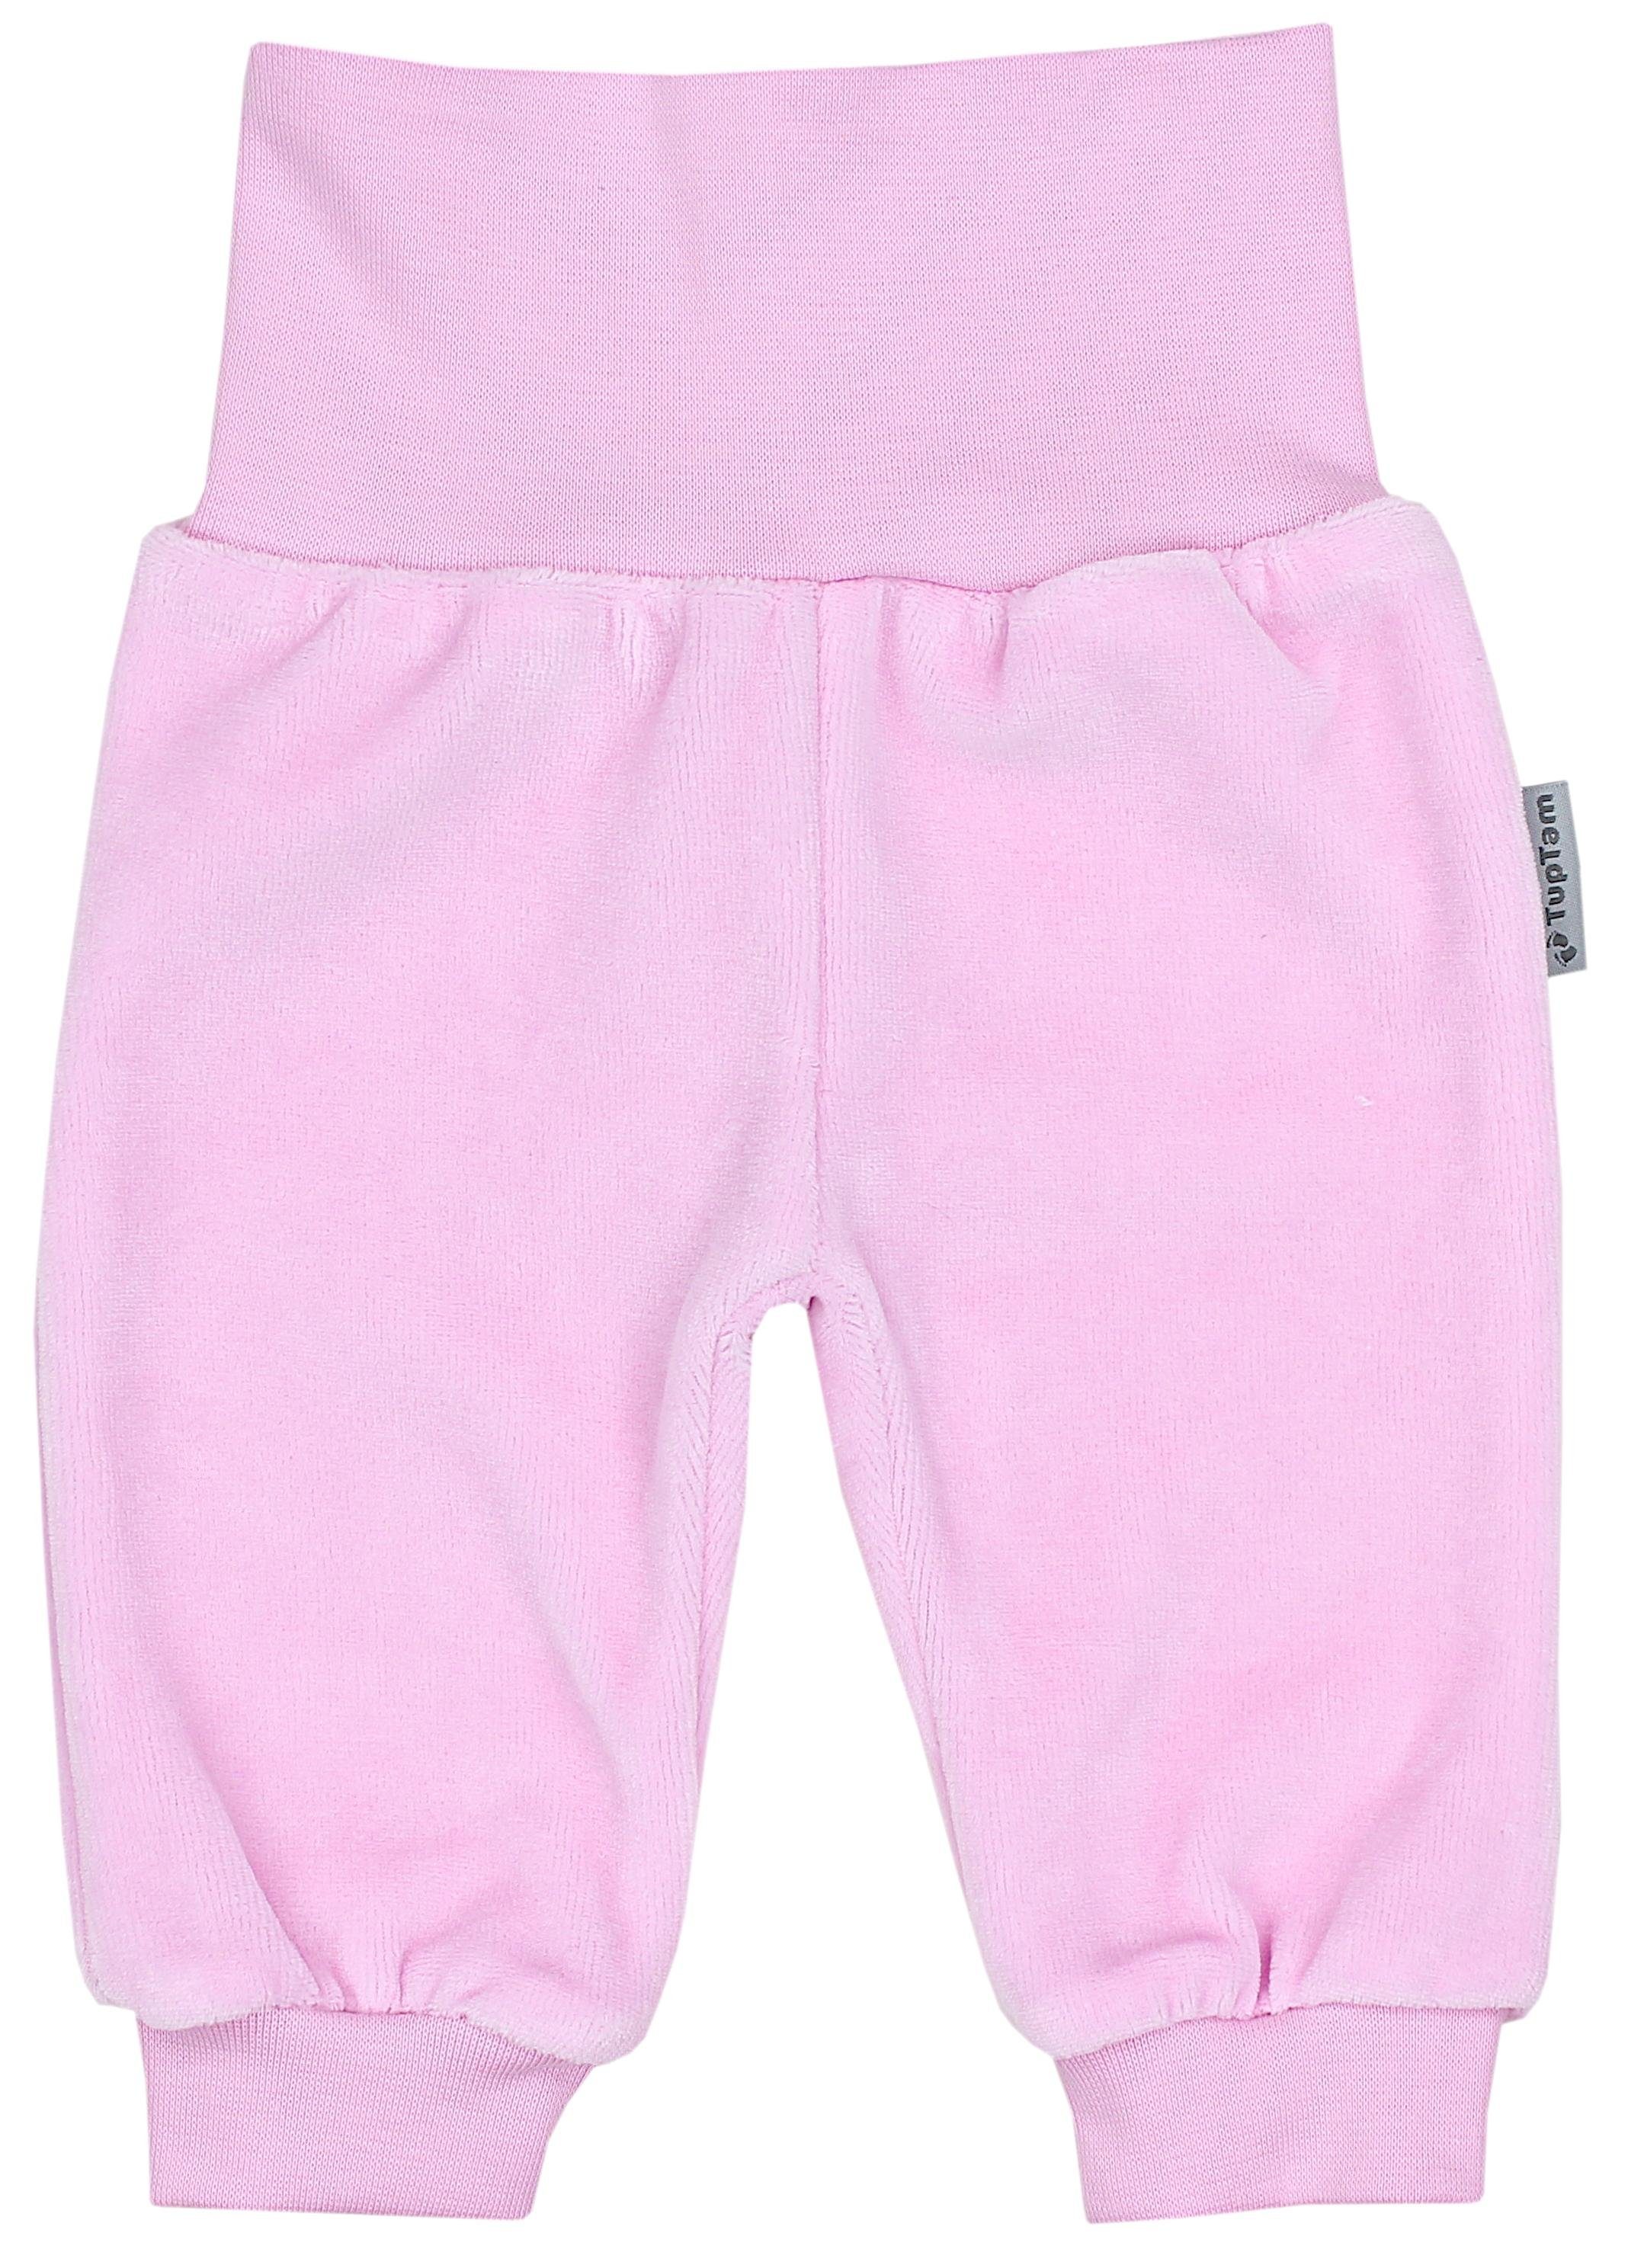 TupTam Sweathose TupTam Baby Mädchen / Nicki / Jogginghose 3er Mintgrün Grau Rosa Pack Hose